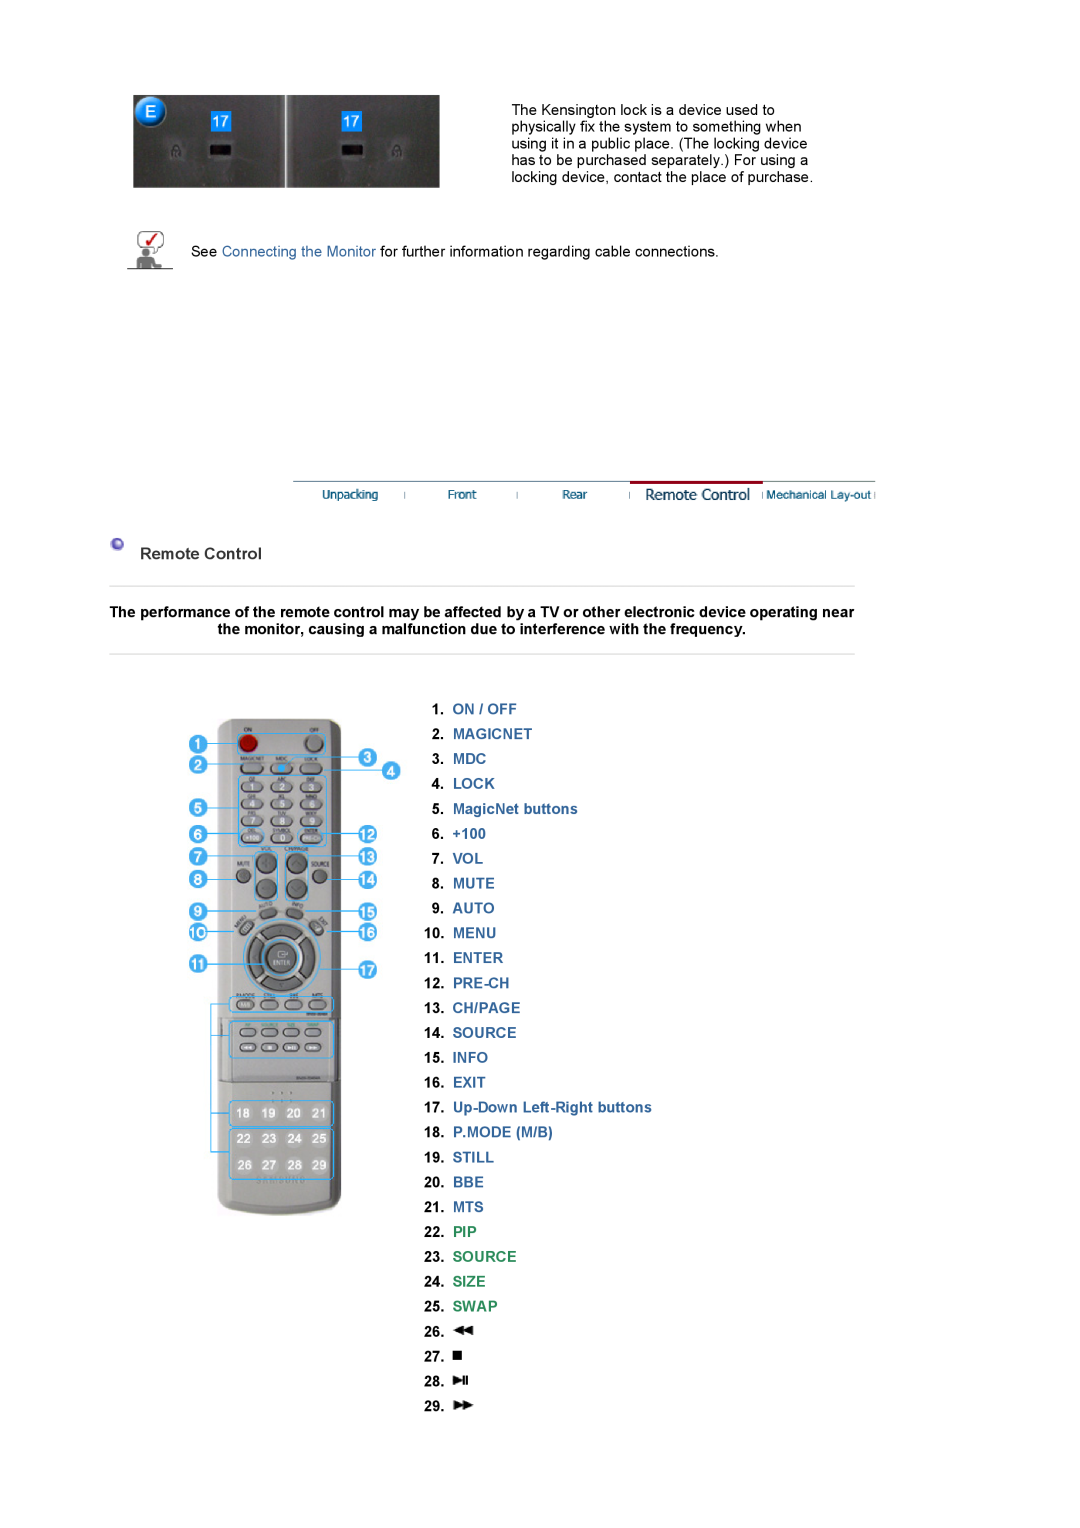 Samsung 320P manual Remote Control, PIP 23. SOURCE 24. SIZE 25. SWAP 